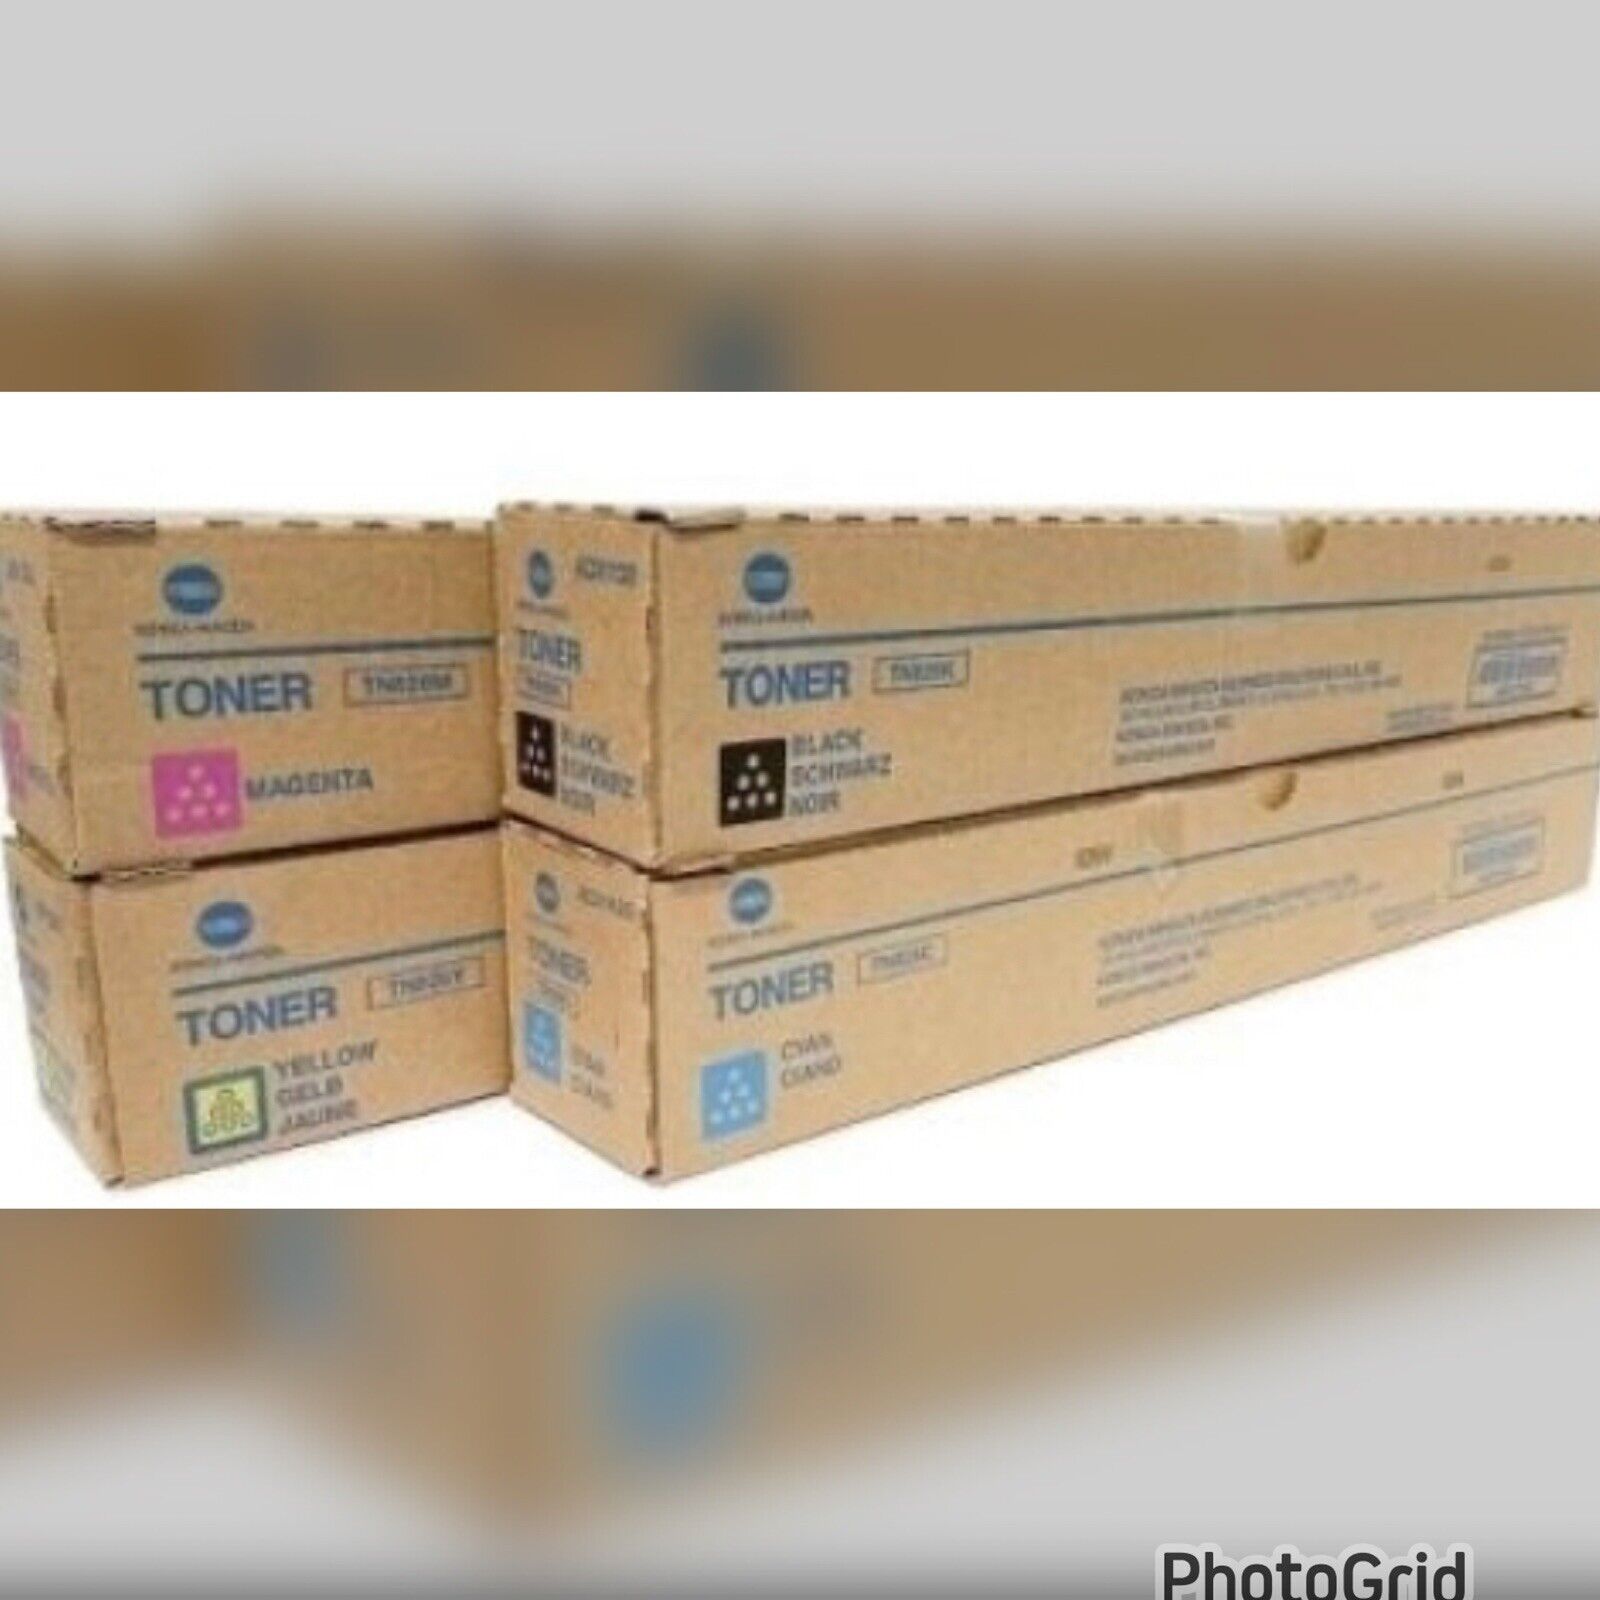 NEW Konica Minolta TN626 Toner Cartridges Full Set All 4 IMMACULATE BOXES OEM